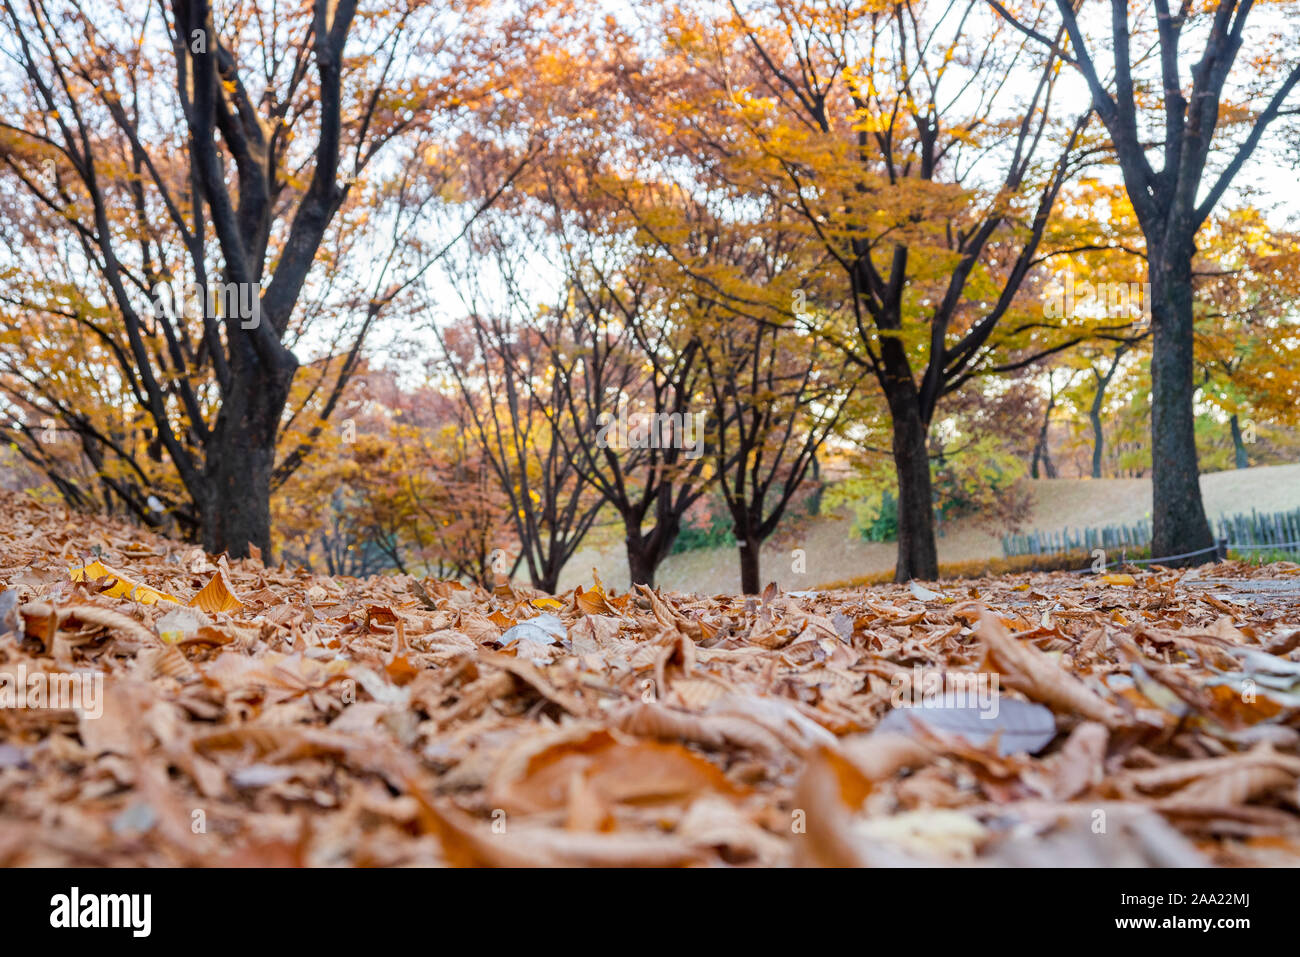 Fall leaves. Fall scenery. Seoul Olympic Park in South Korea. Stock Photo